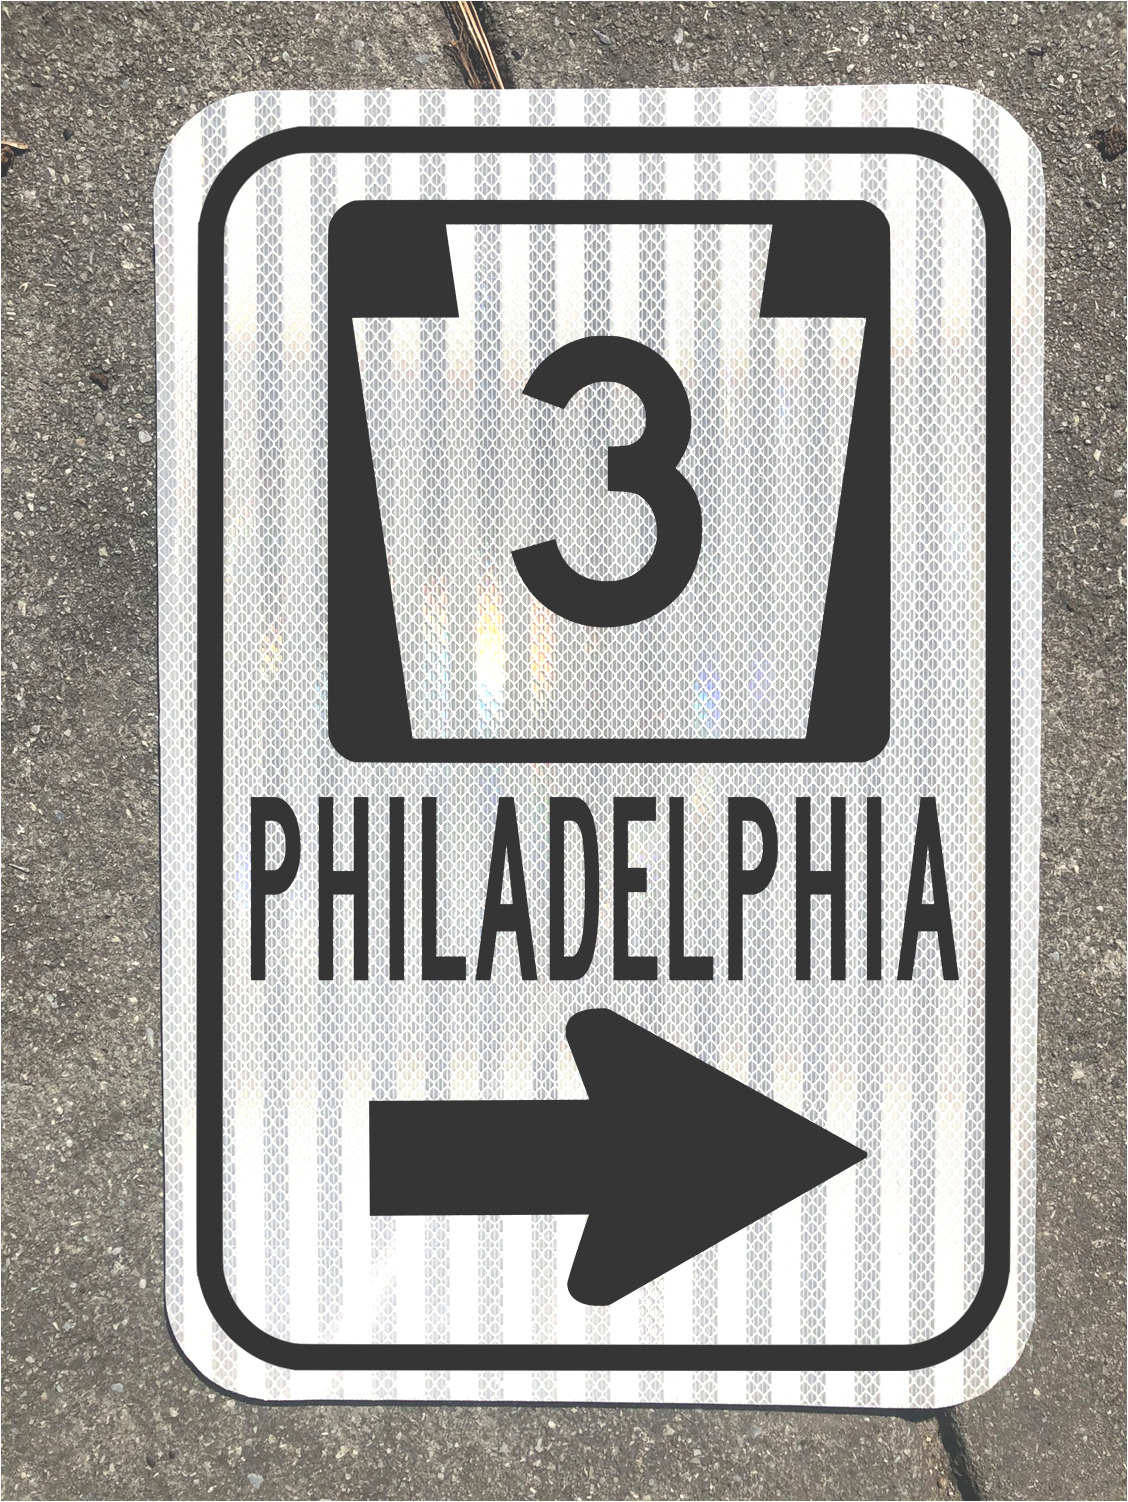 PHILADELPHIA PA Highway 3 road sign 12\